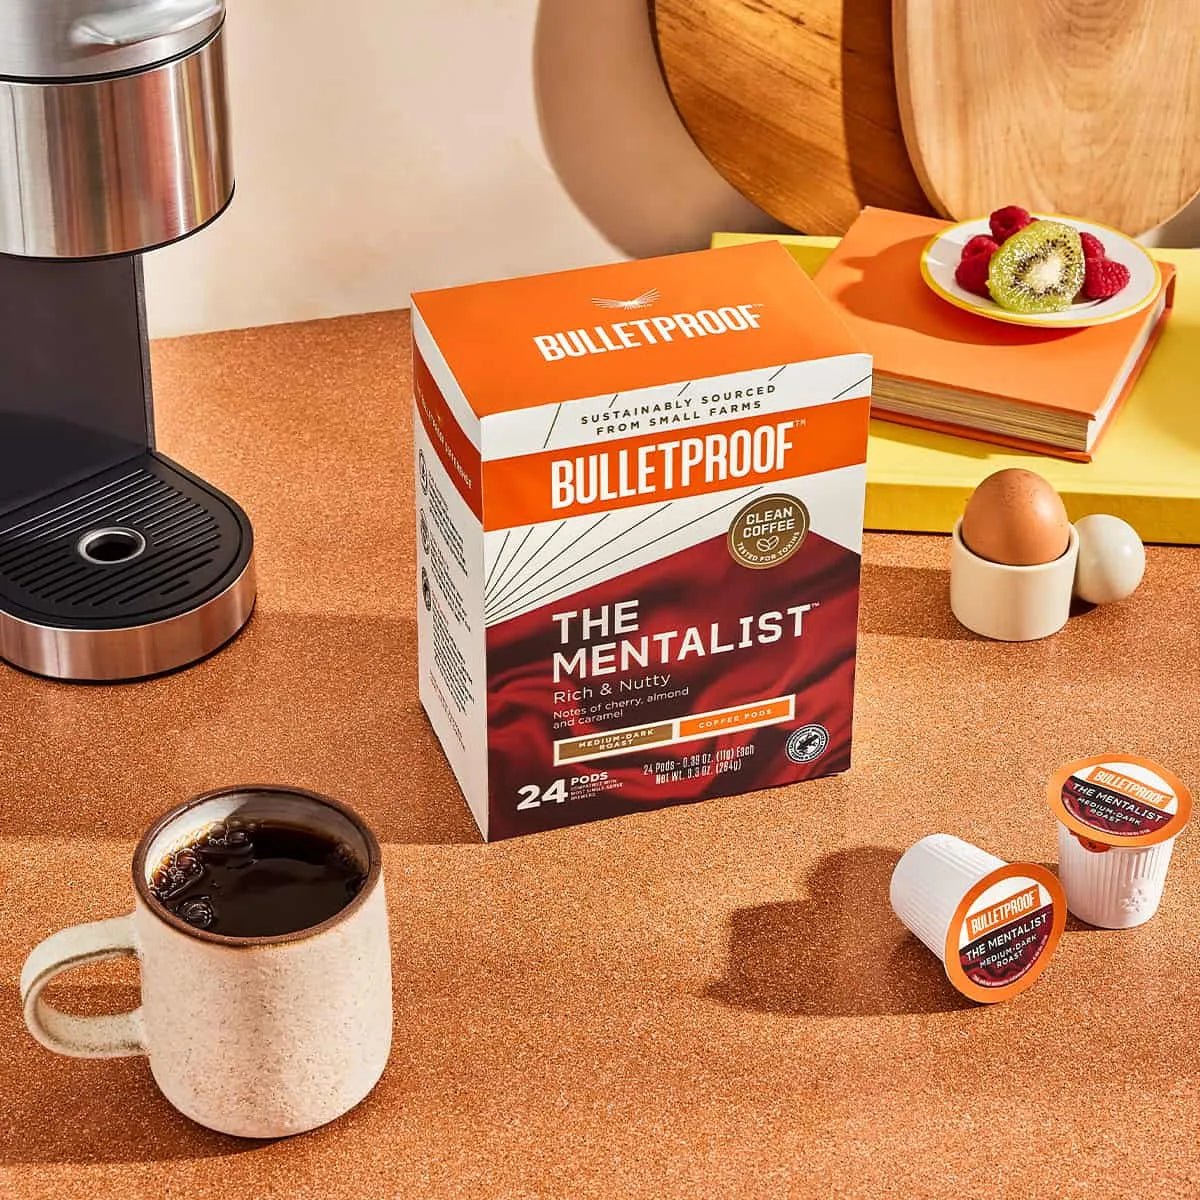 Bulletproof コーヒーポッド ザ・メンタリスト ミディアムダークロースト 24ポッド入り COFFEE PODS THE MENTALIST, MEDIUM-DARK ROAST - HAPIVERI